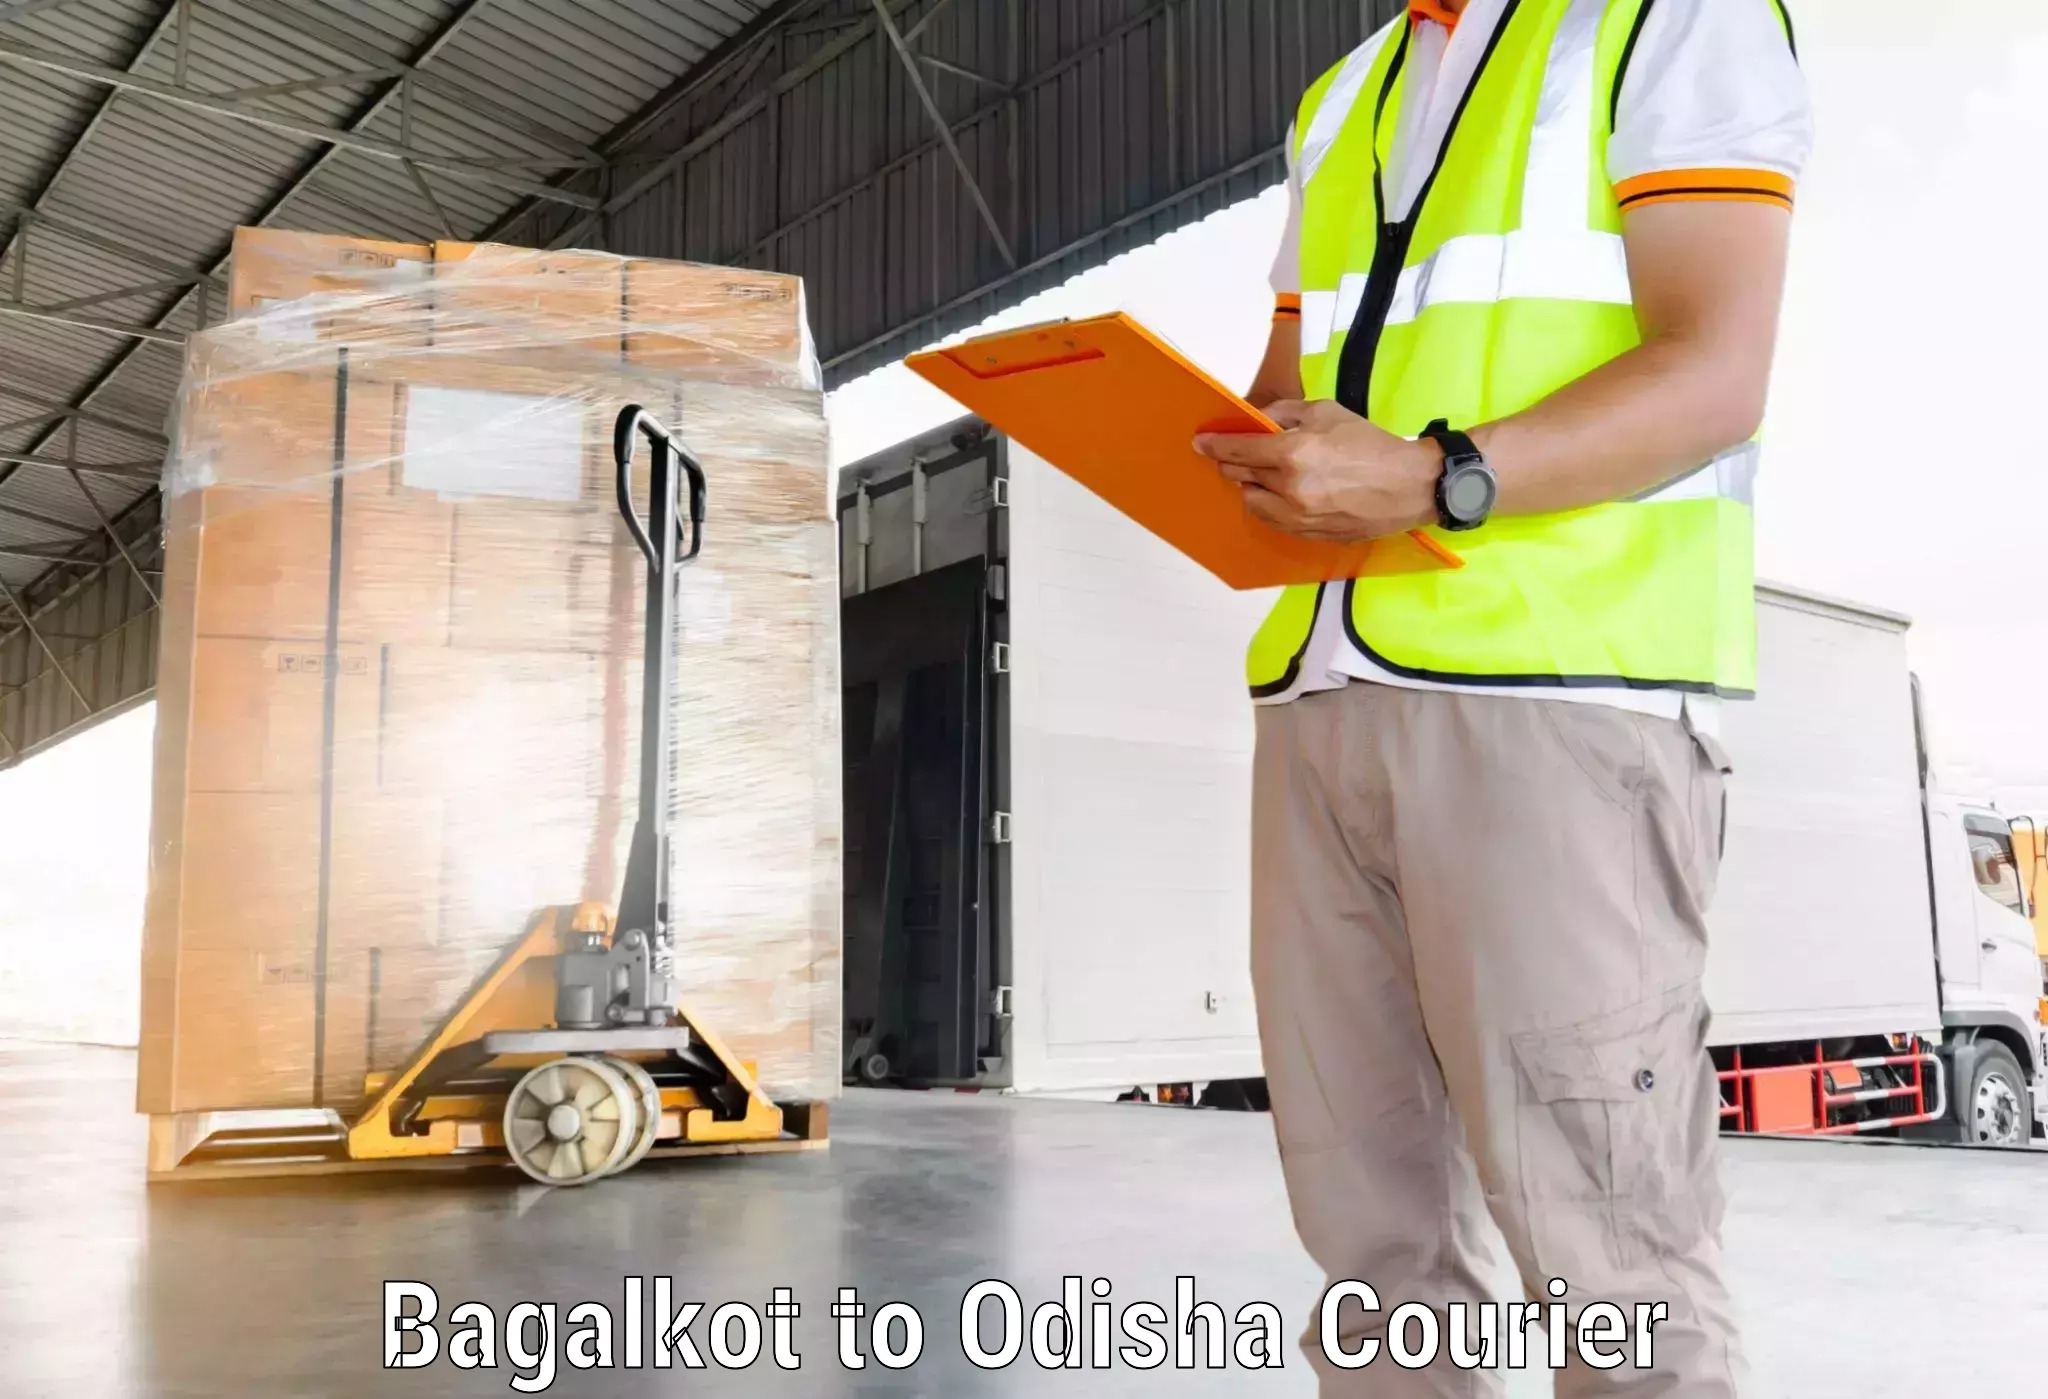 Courier app Bagalkot to Dandisahi